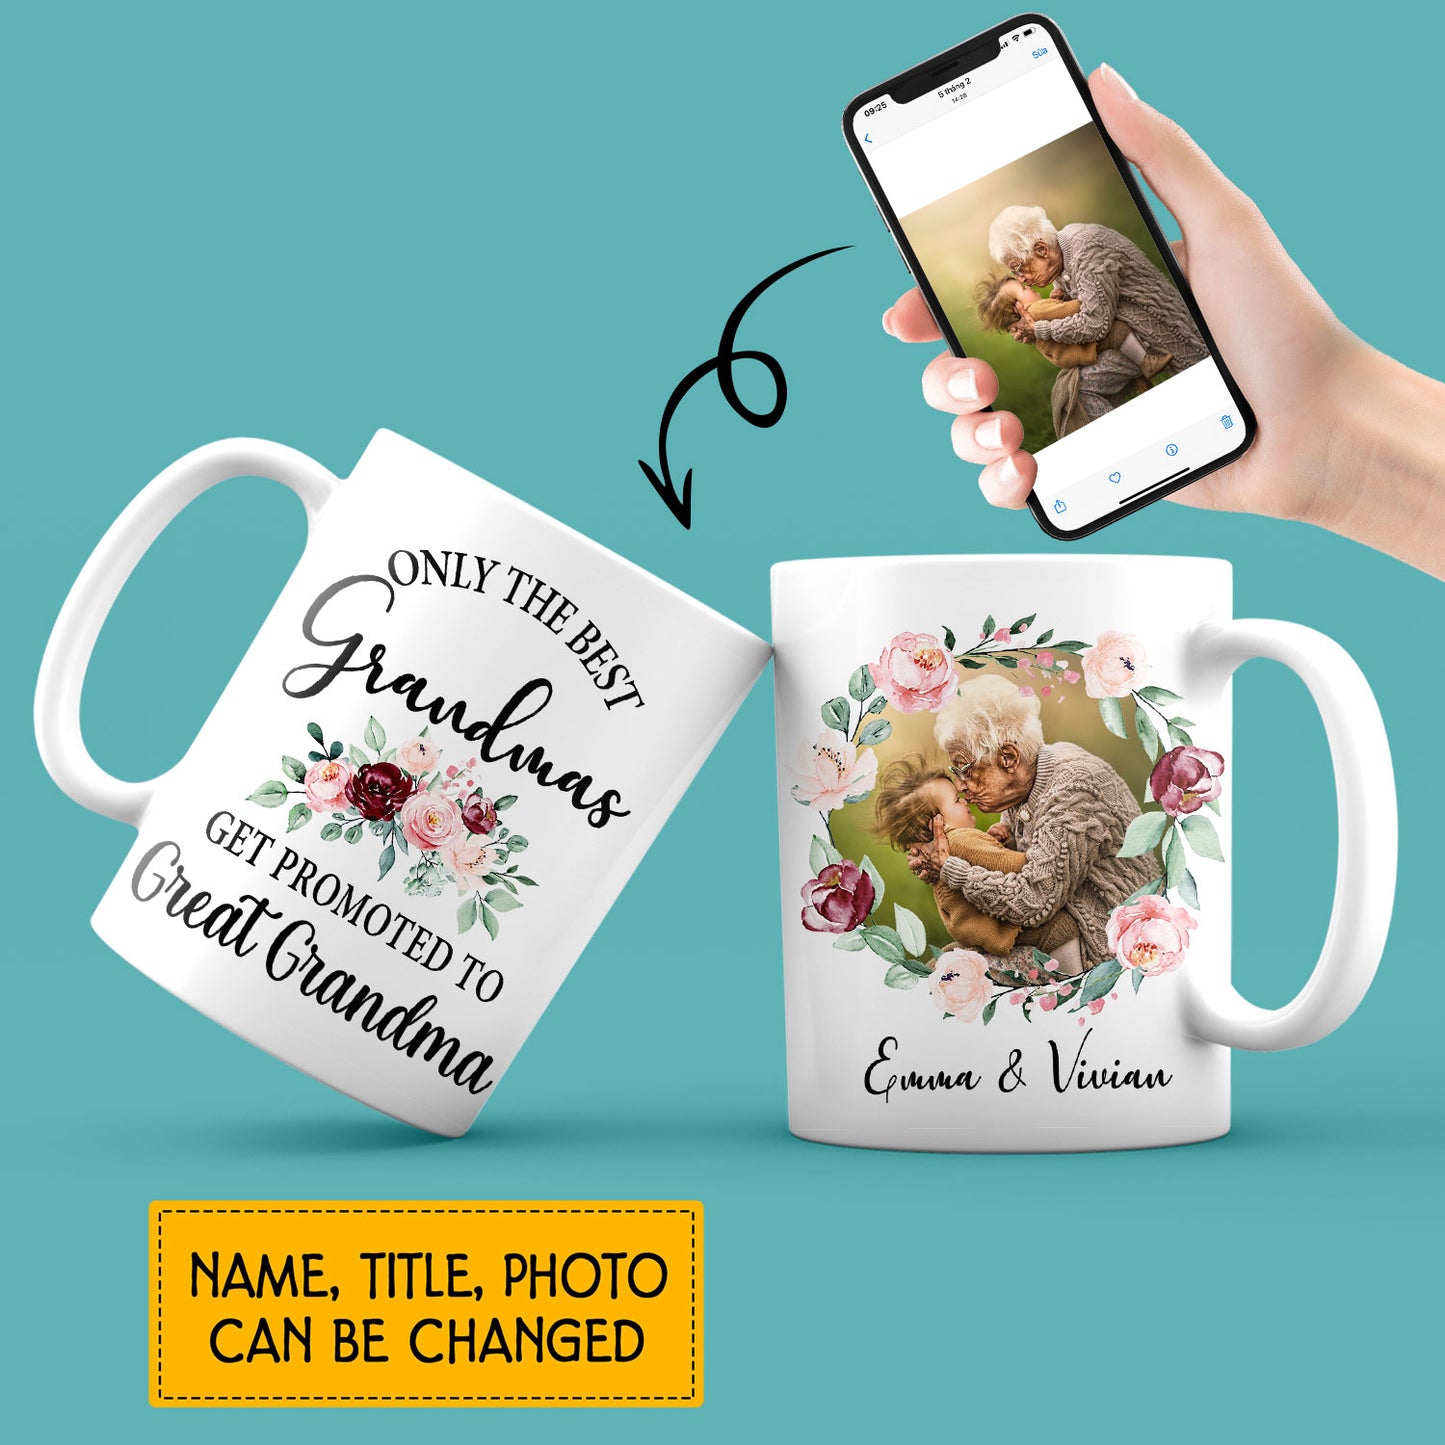 Only The Best Grandmas Get Promoted to Great Grandma Custom Mug